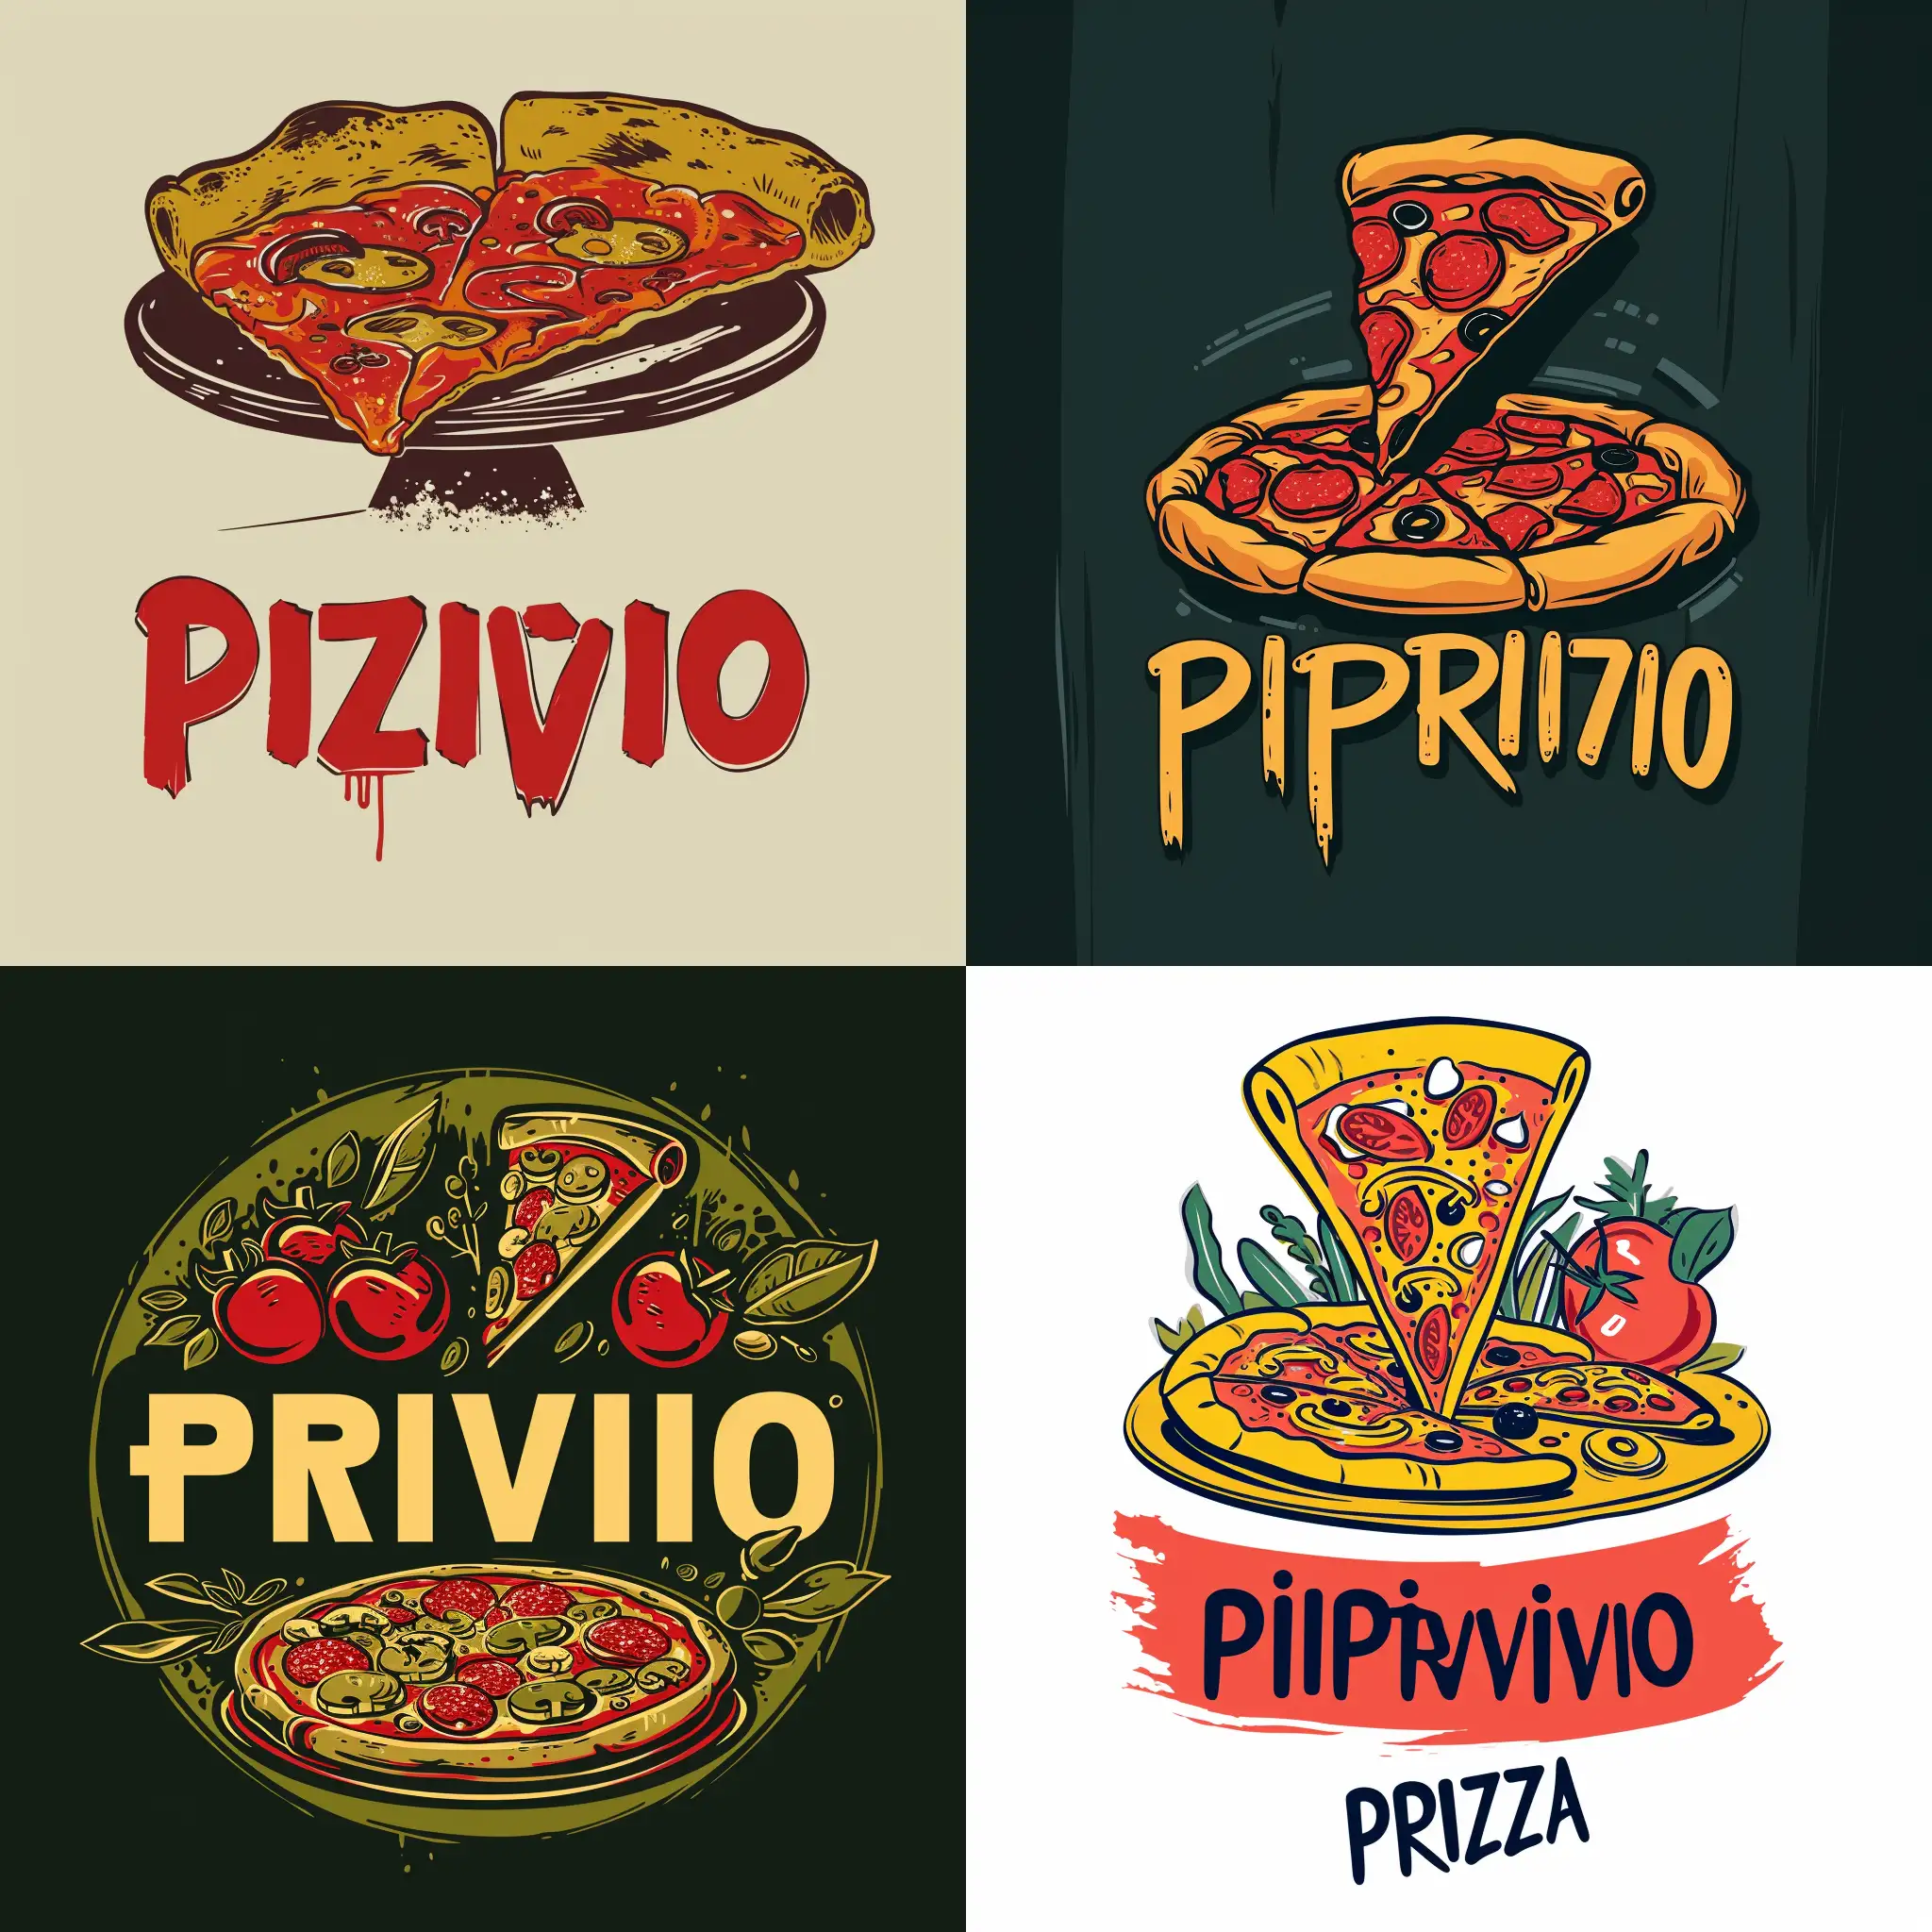 Logo for "Pizza Privio" restaurant